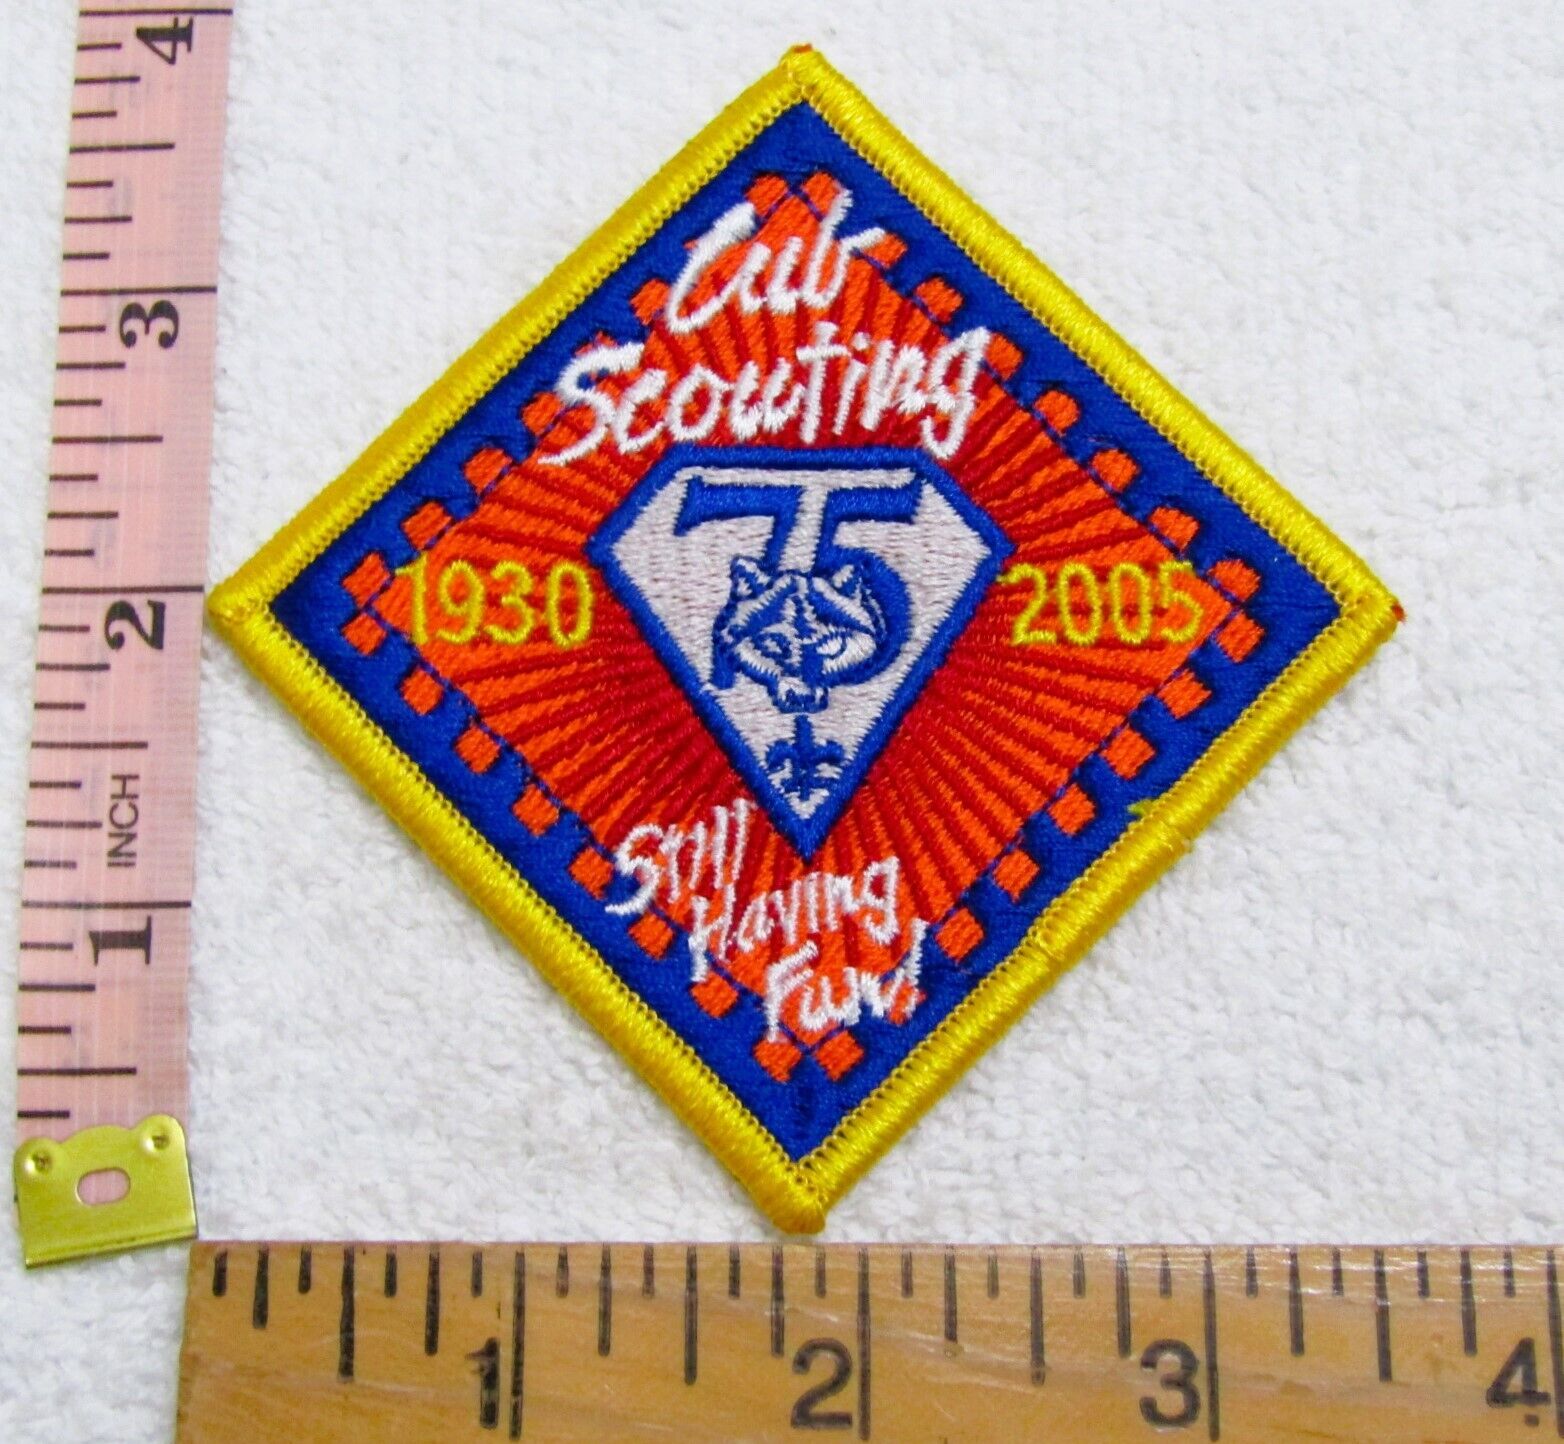 1930 - 2005 Cub Scouting Still Having Fun 75 Years Anniversary BSA Patch